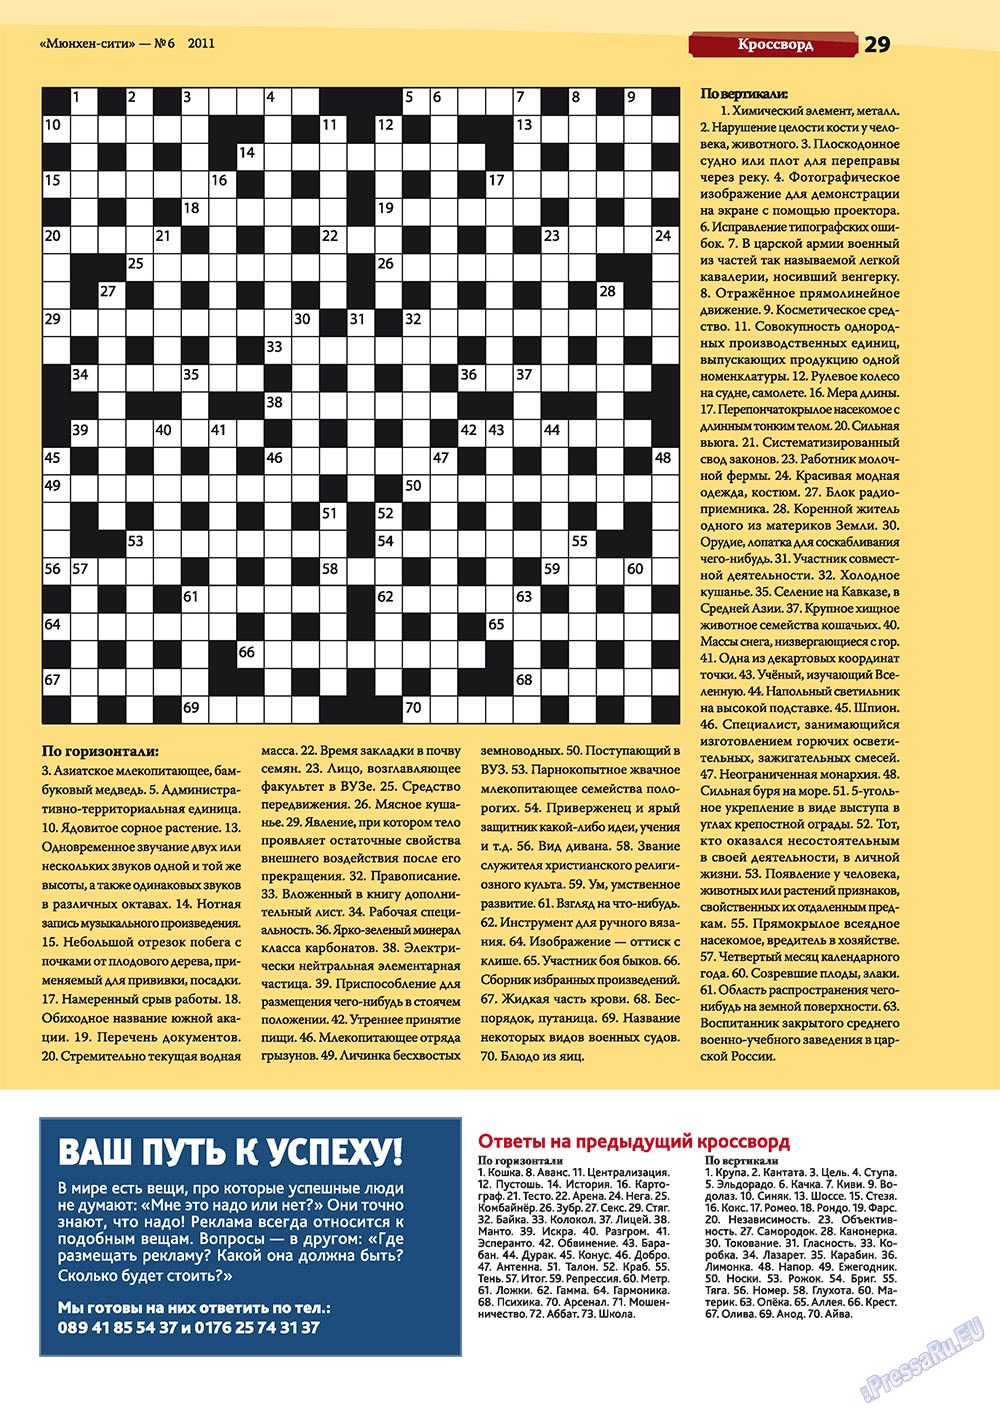 Мюнхен-сити, журнал. 2011 №6 стр.29